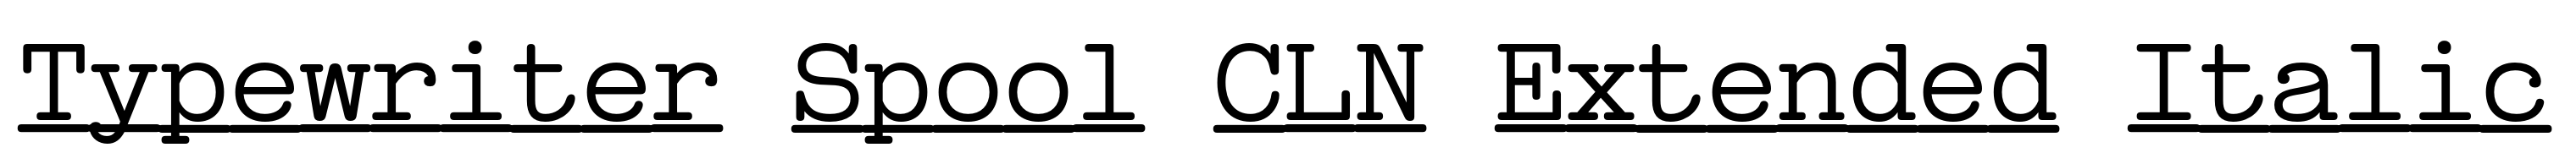 Typewriter Spool CLN Extended Italic